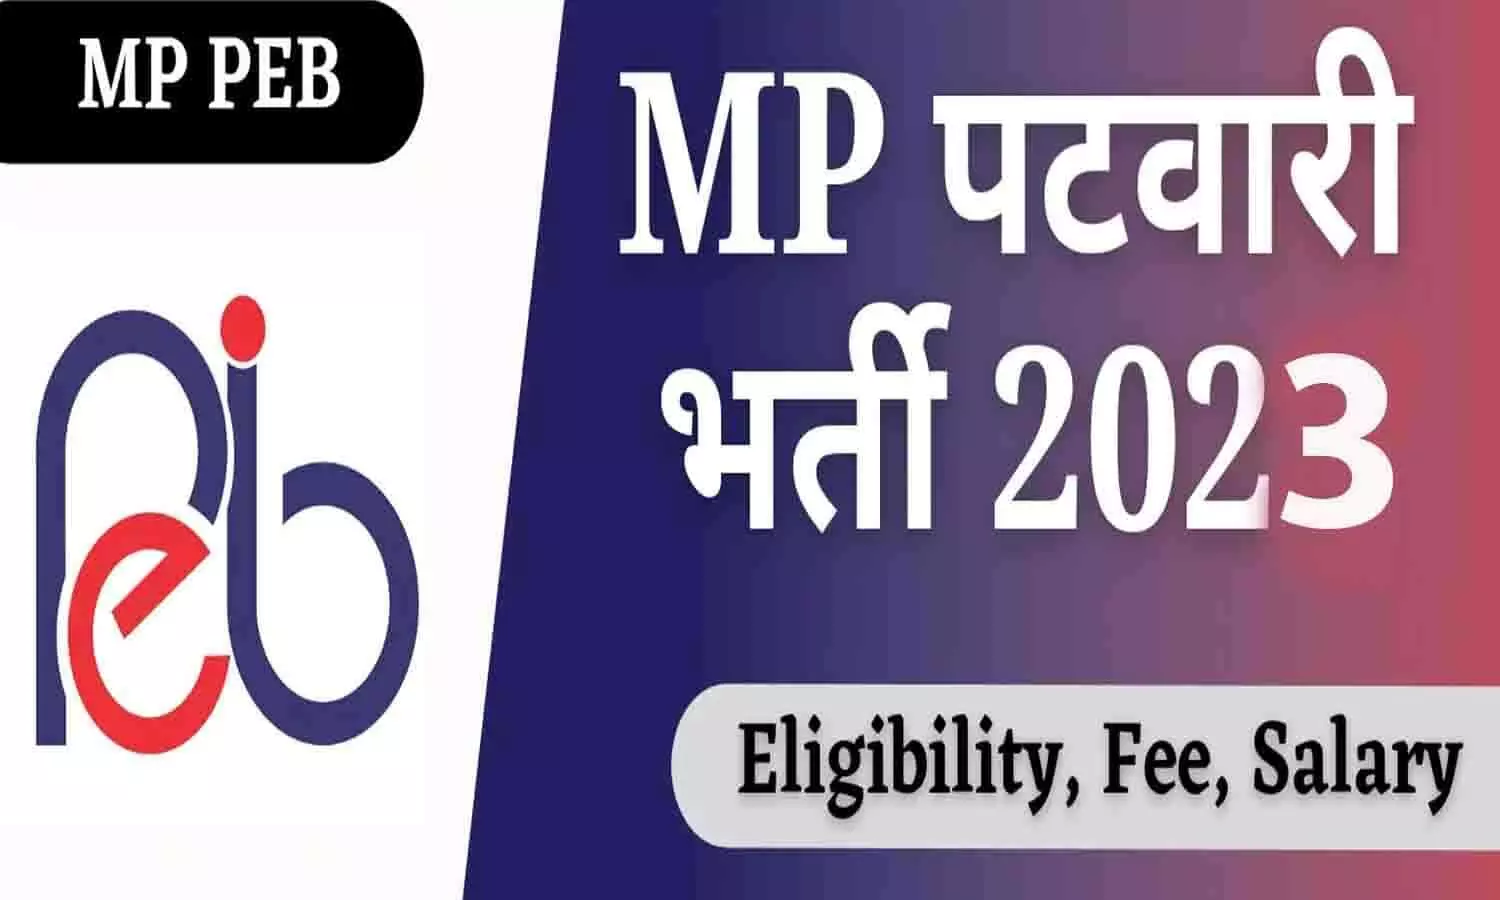 MP Patwari Vacancy 2023